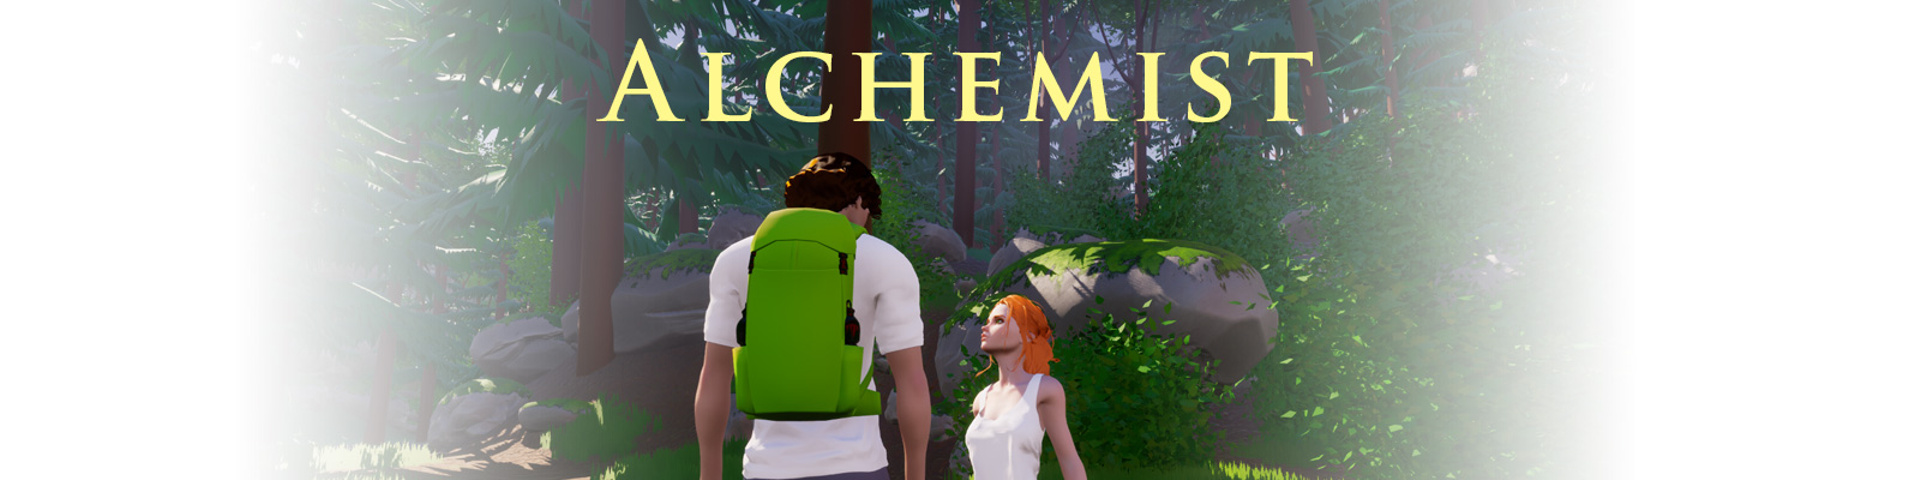 Alchemist poster